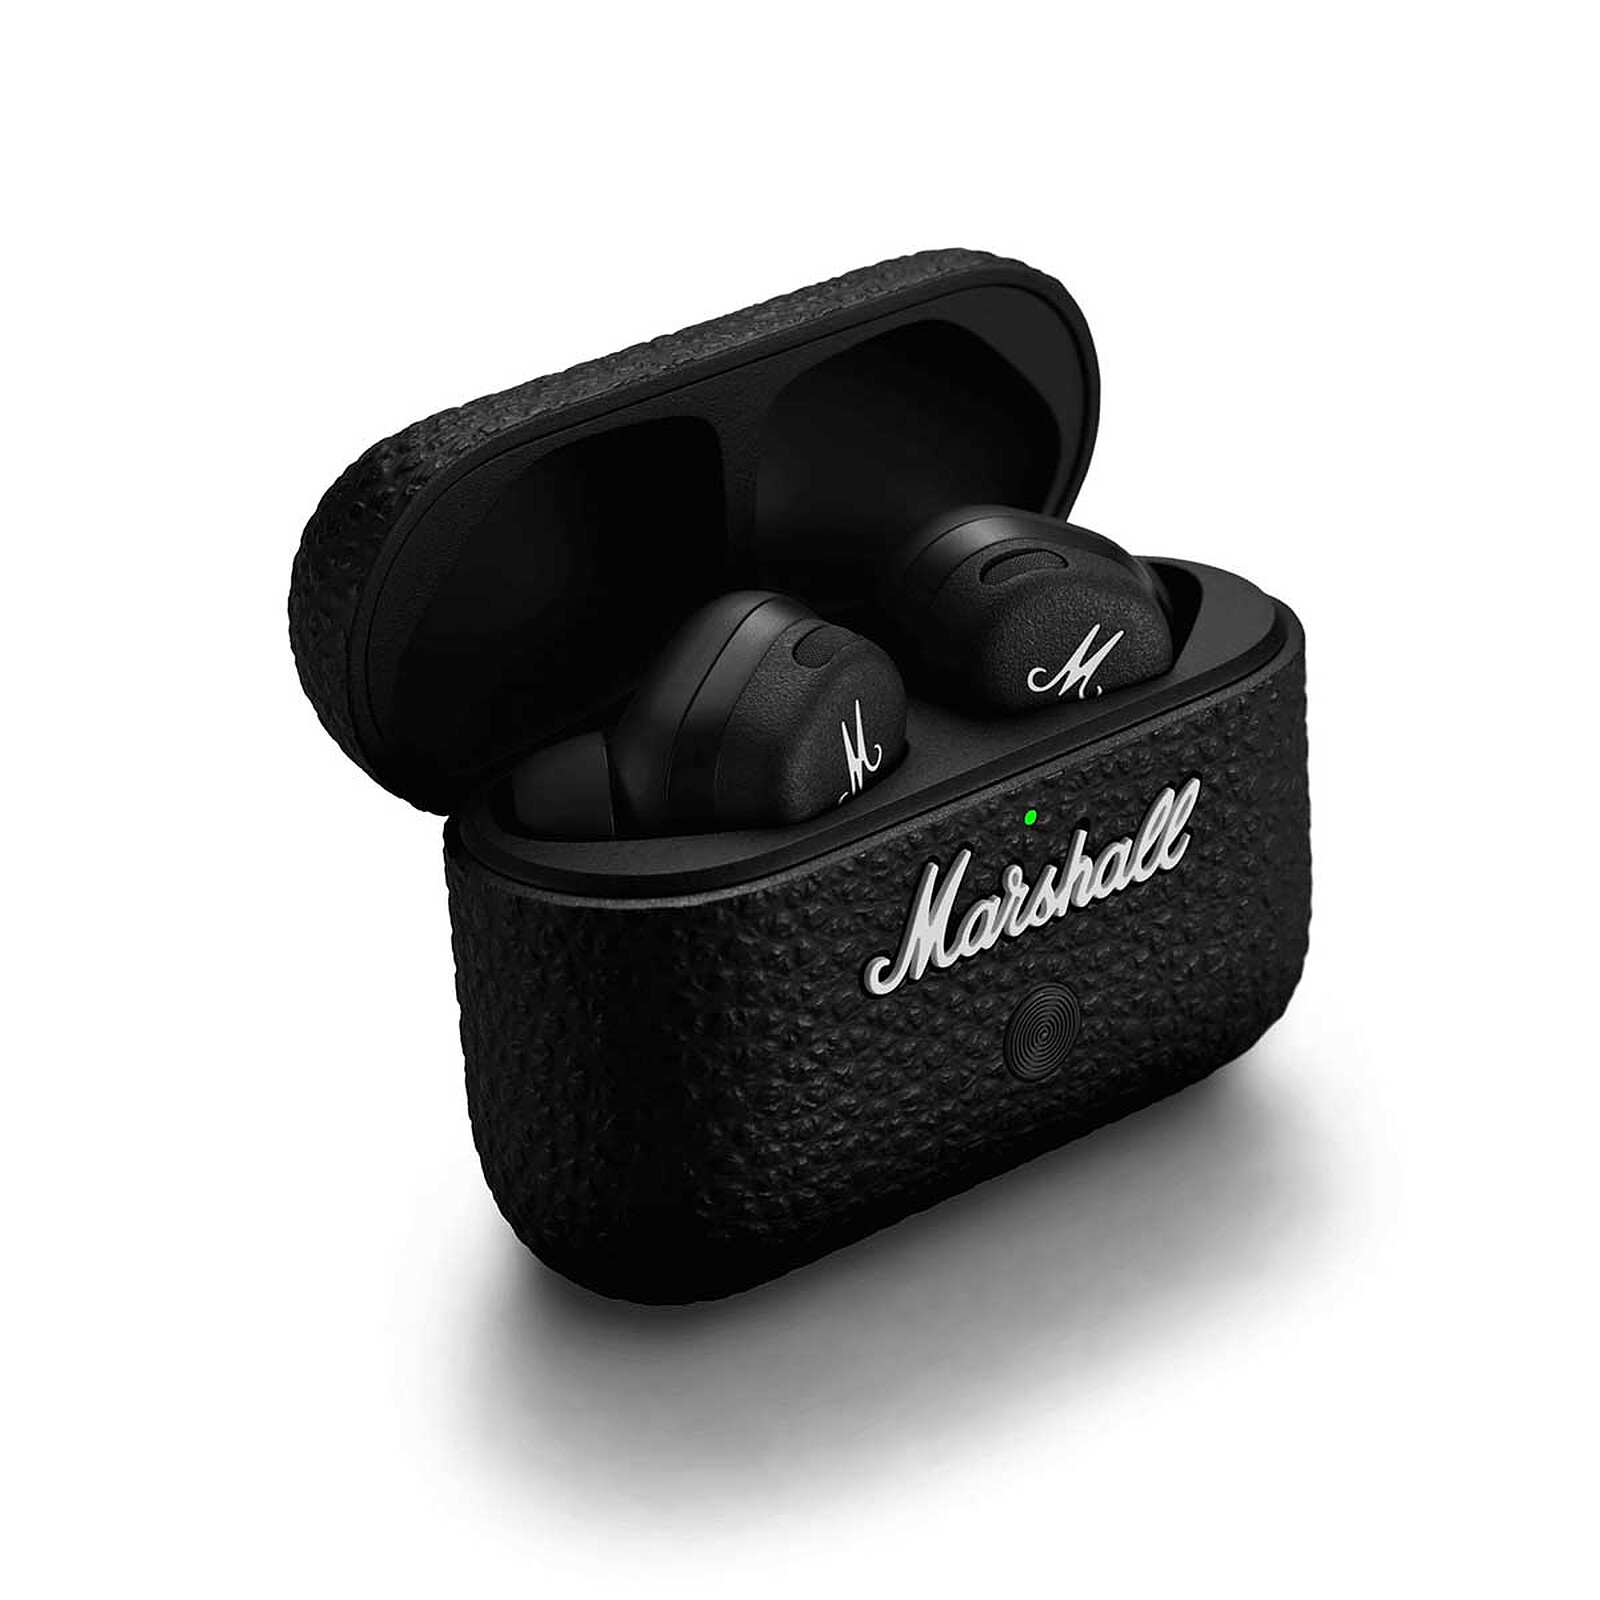 Marshall Major IV - Headphones - LDLC 3-year warranty